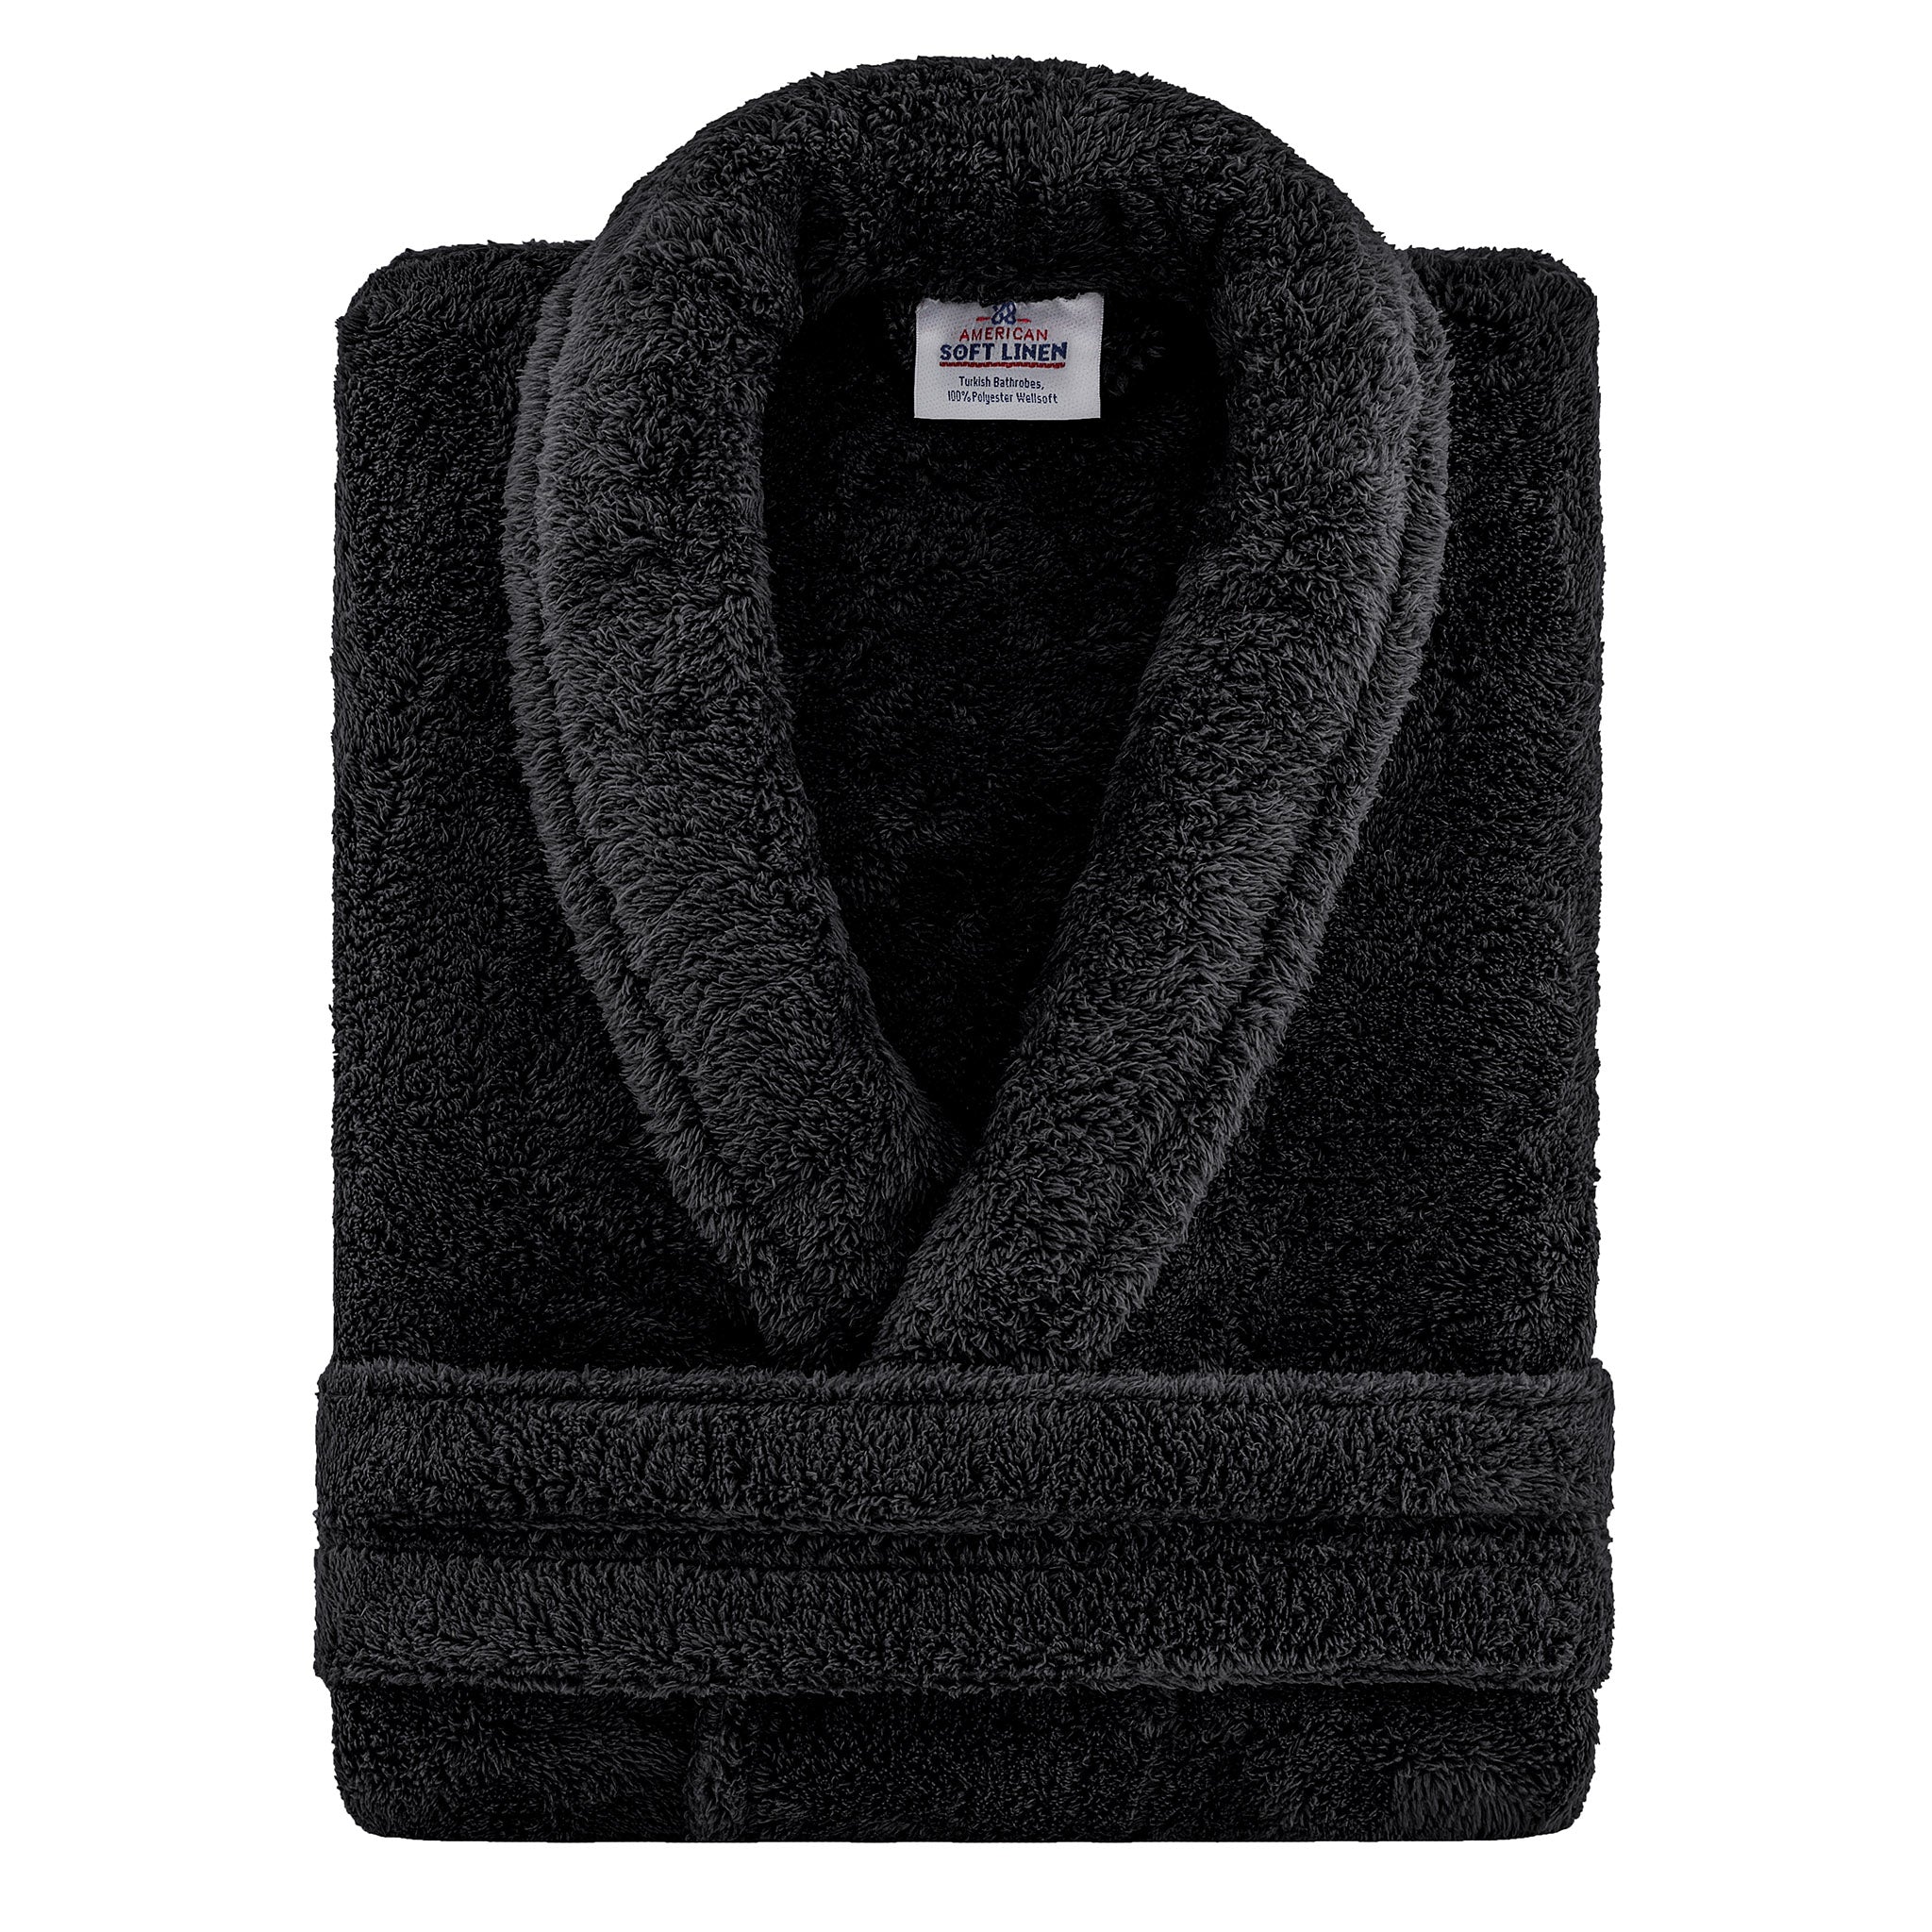 American Soft Linen Super Soft Absorbent and Fluffy Unisex Fleece Bathrobe -12 Set Case Pack -M-L-black-3